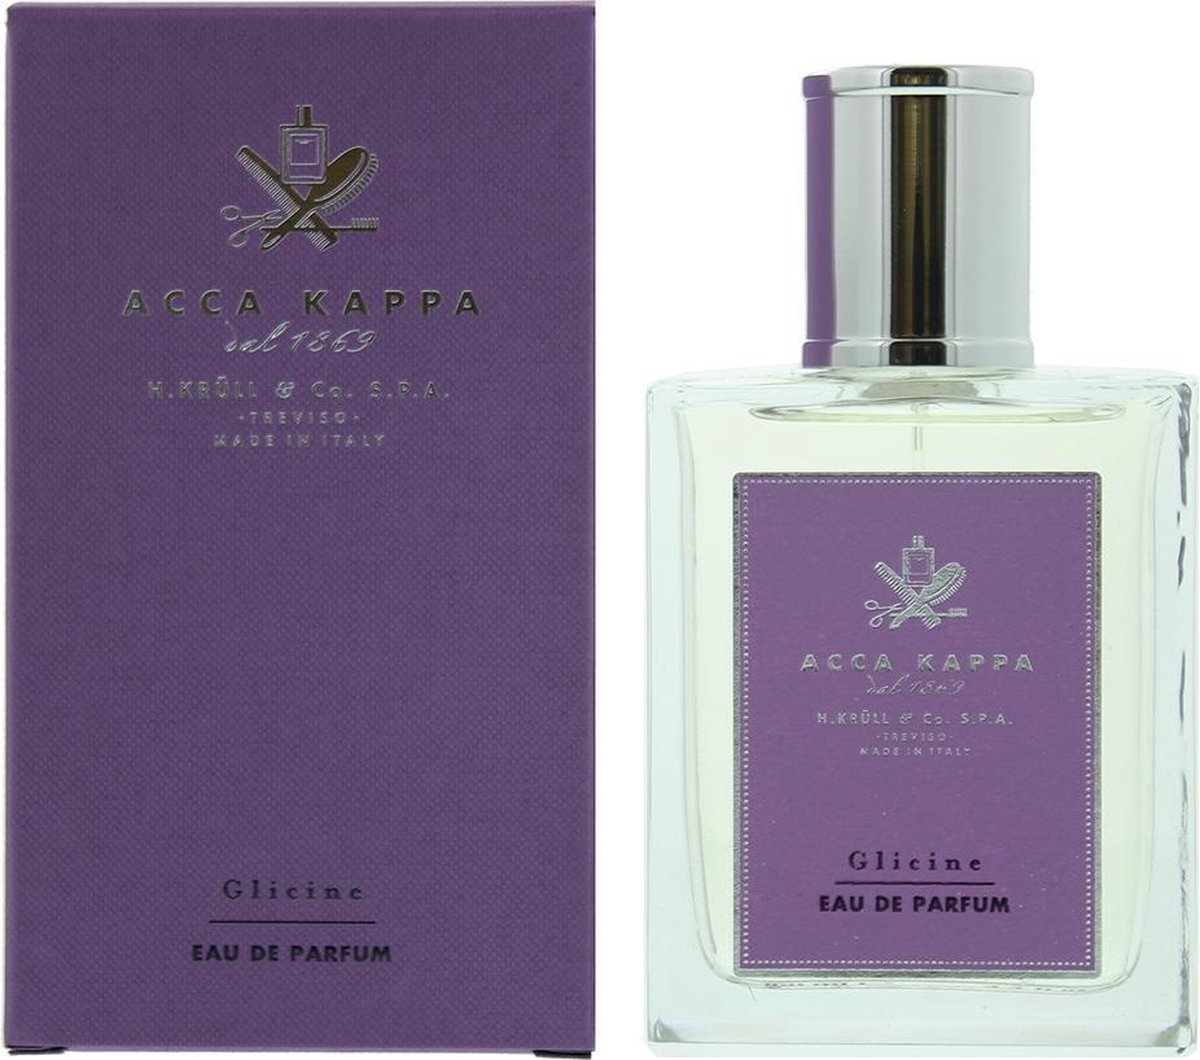 Acca Kappa Glicine - 100ml - Eau de parfum